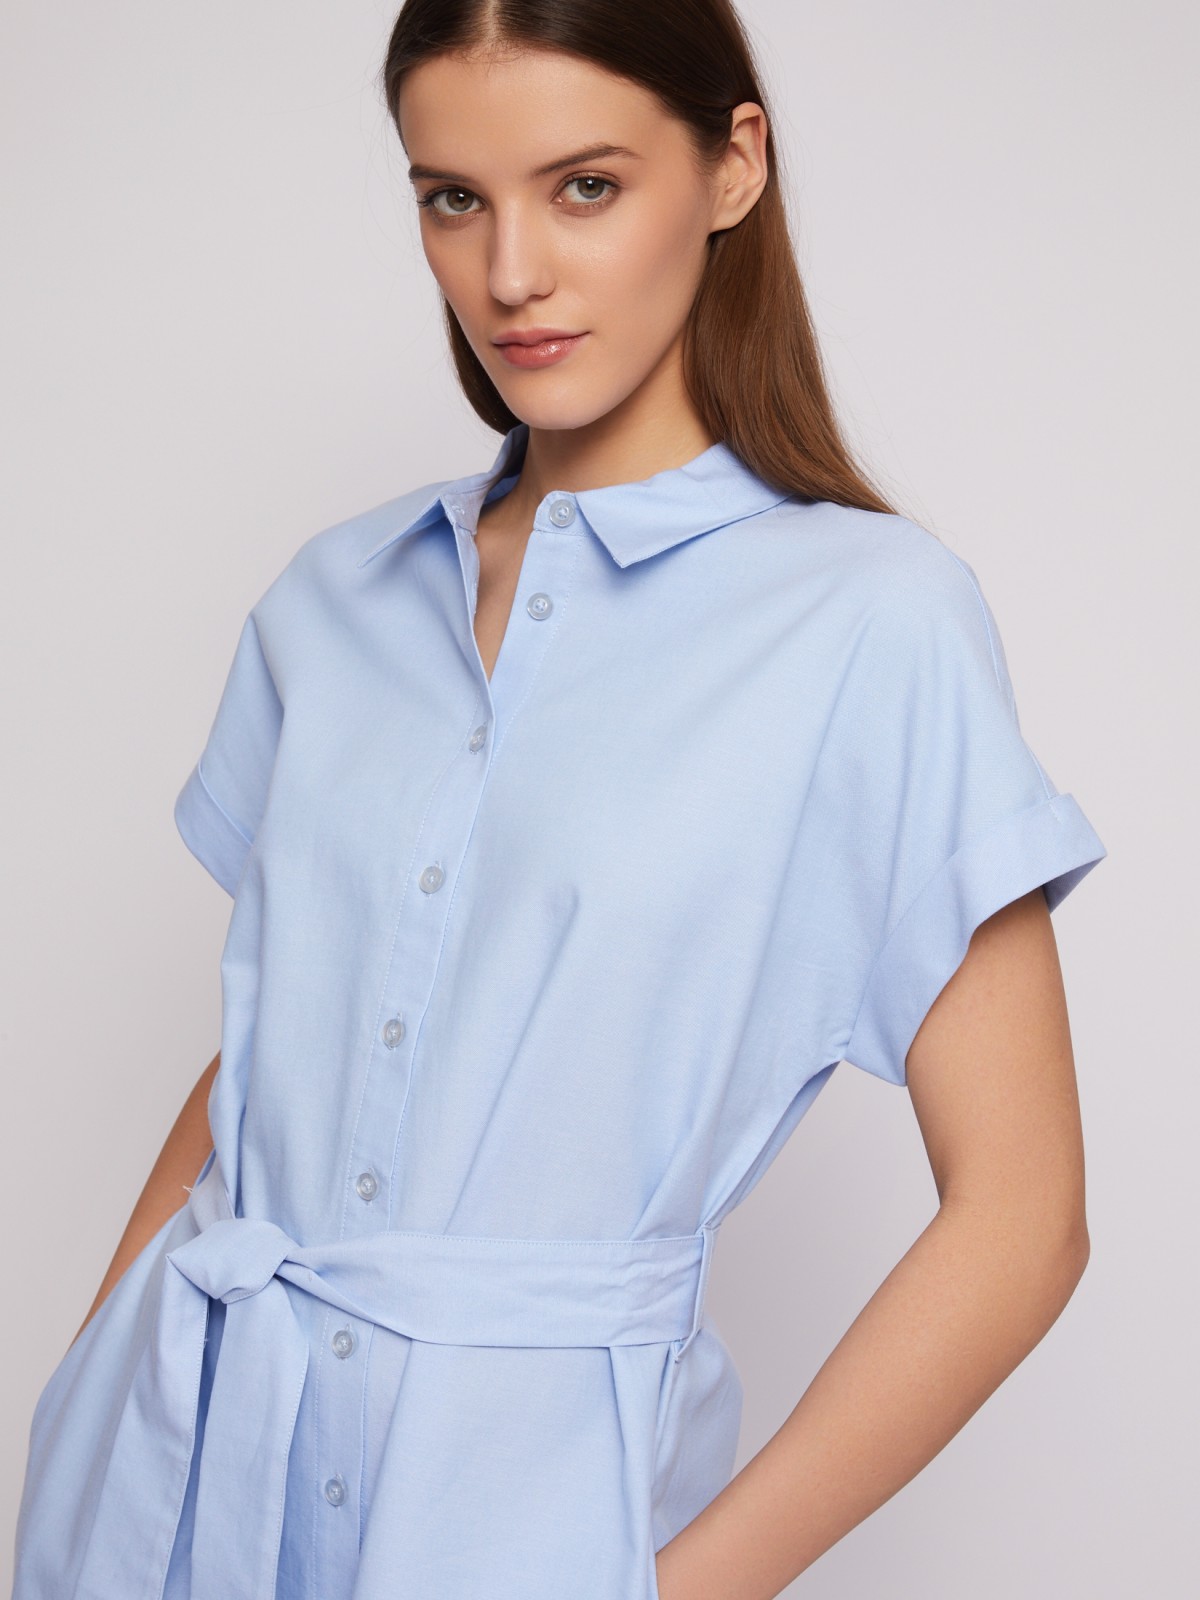 Платье-рубашка из хлопка с коротким рукавом и поясом zolla 024218262353, цвет светло-голубой, размер XS - фото 4